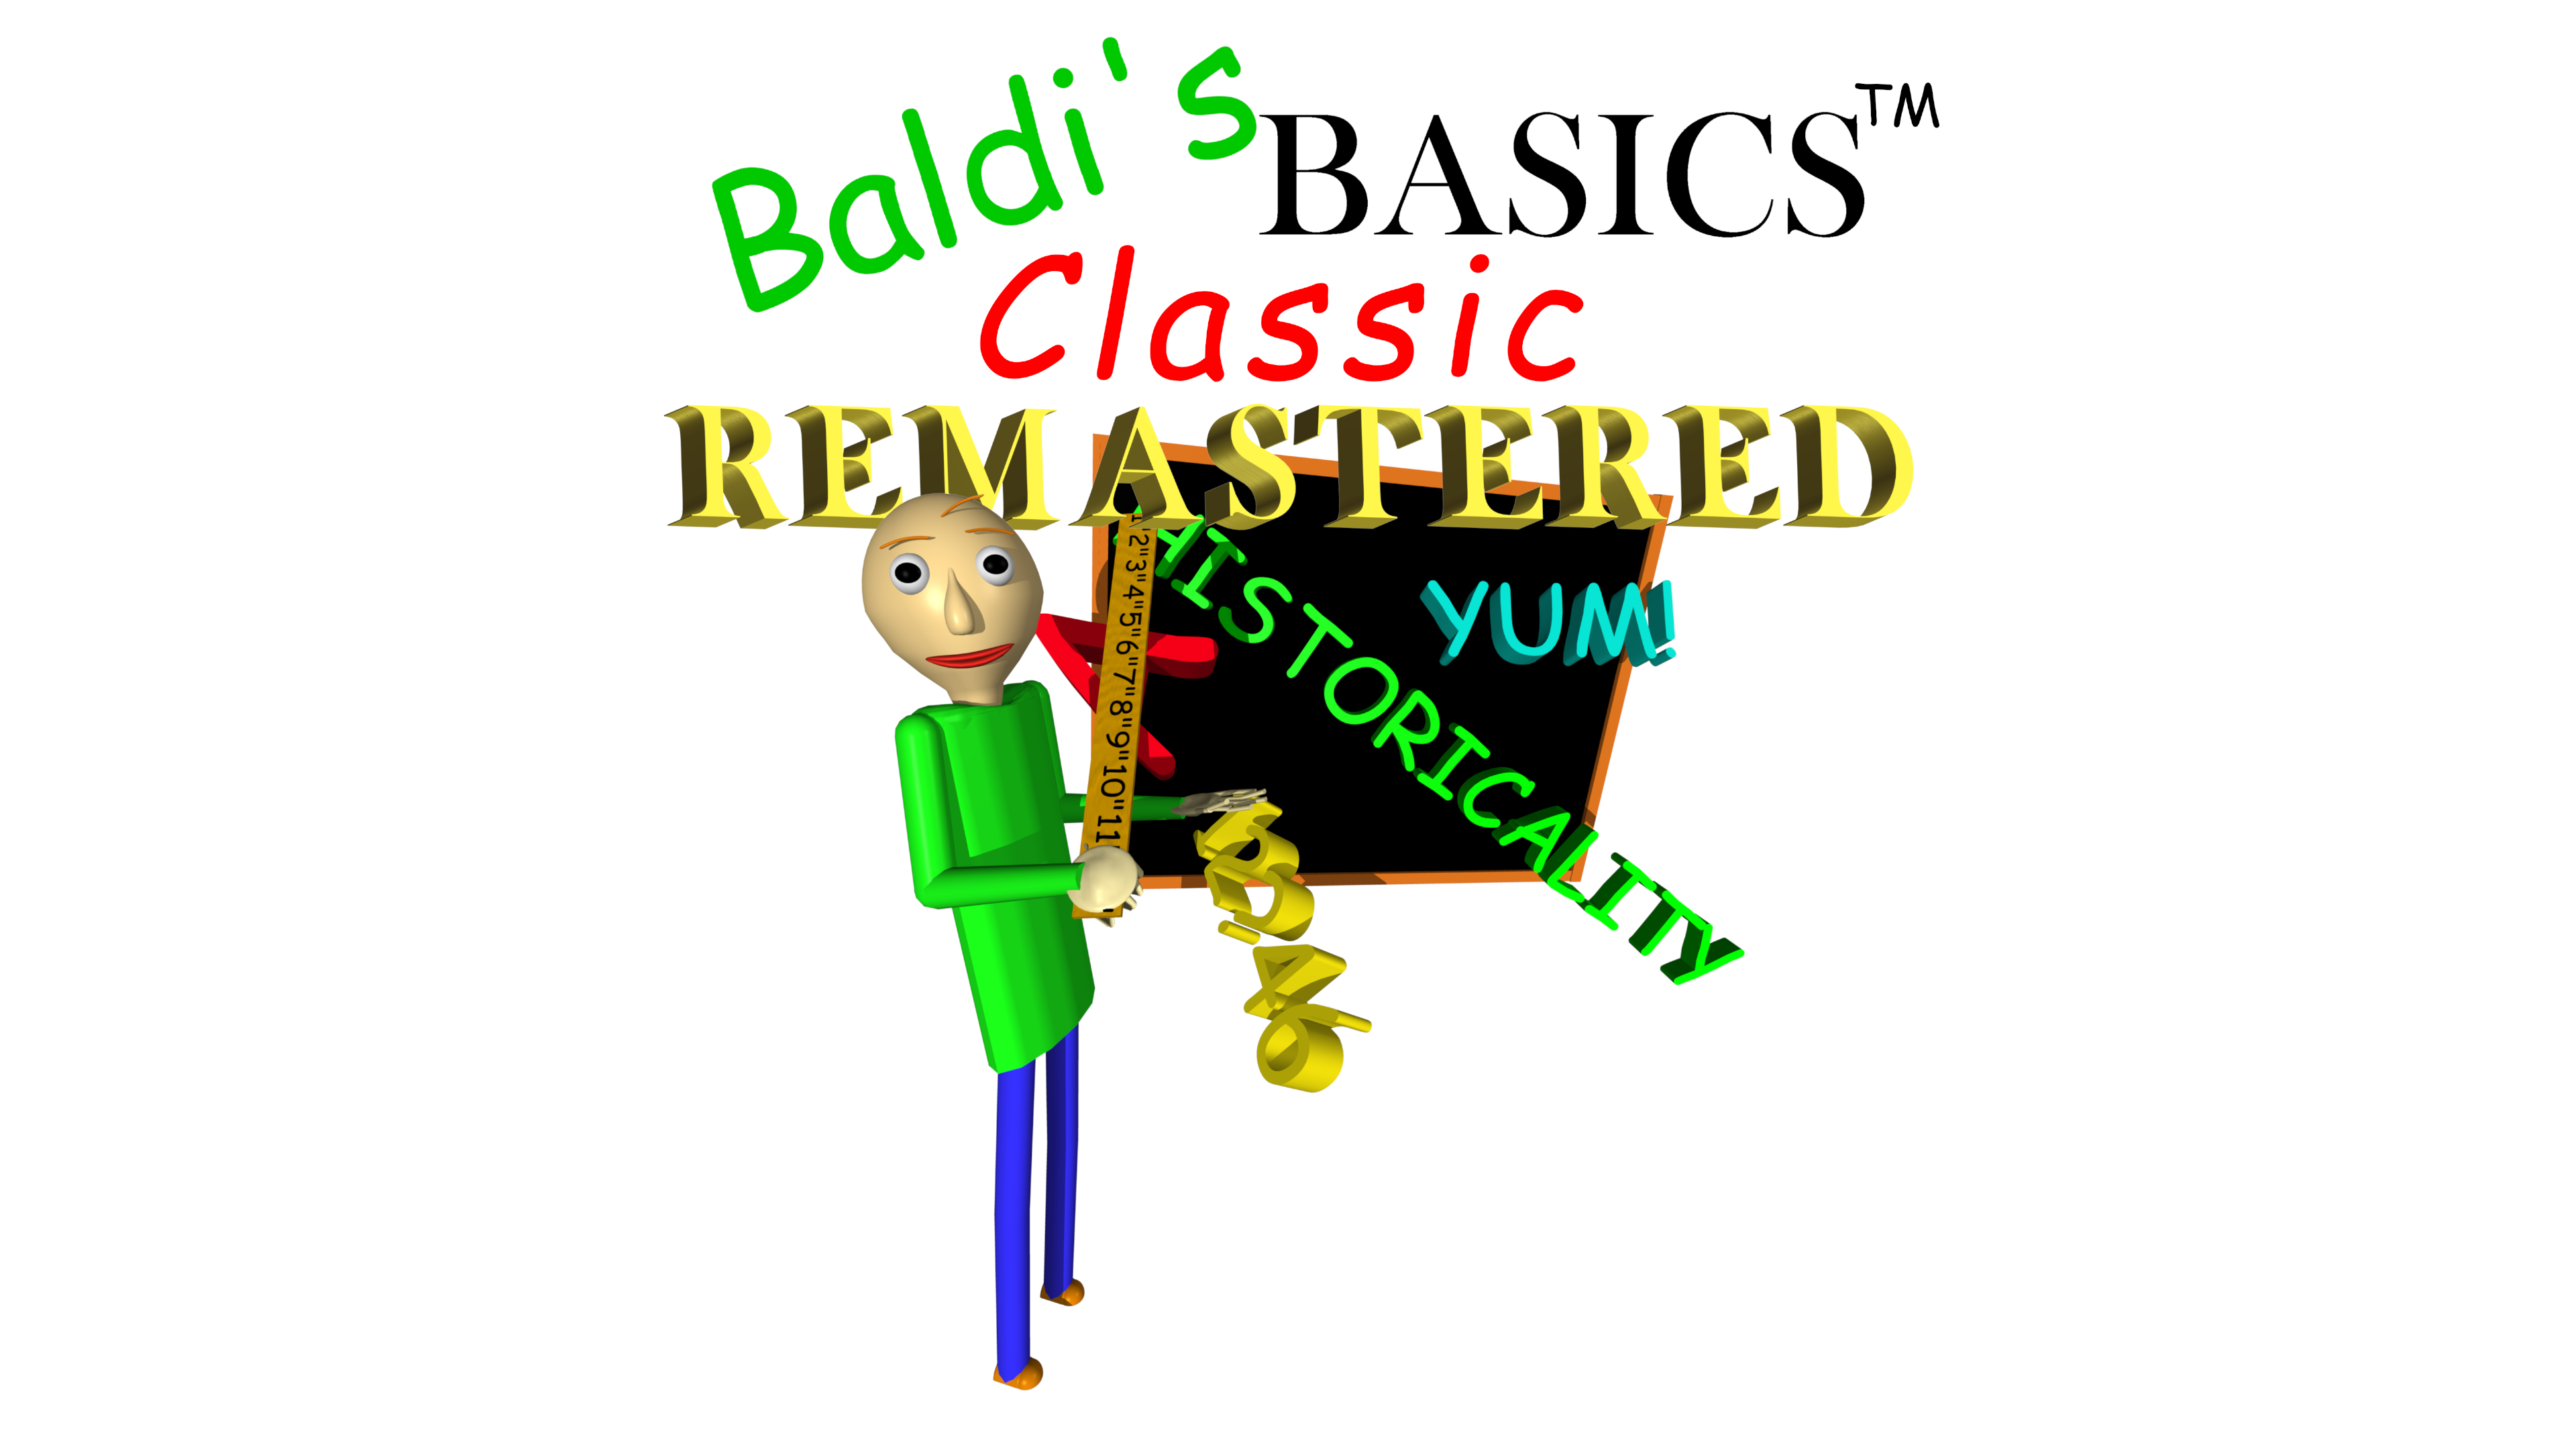 Baldi s basics demo. Baldi's Basics Classic Remastered. Baldis Basics Classic Remastered. Baldi Basics Classic. Baldis Basics Baldi.